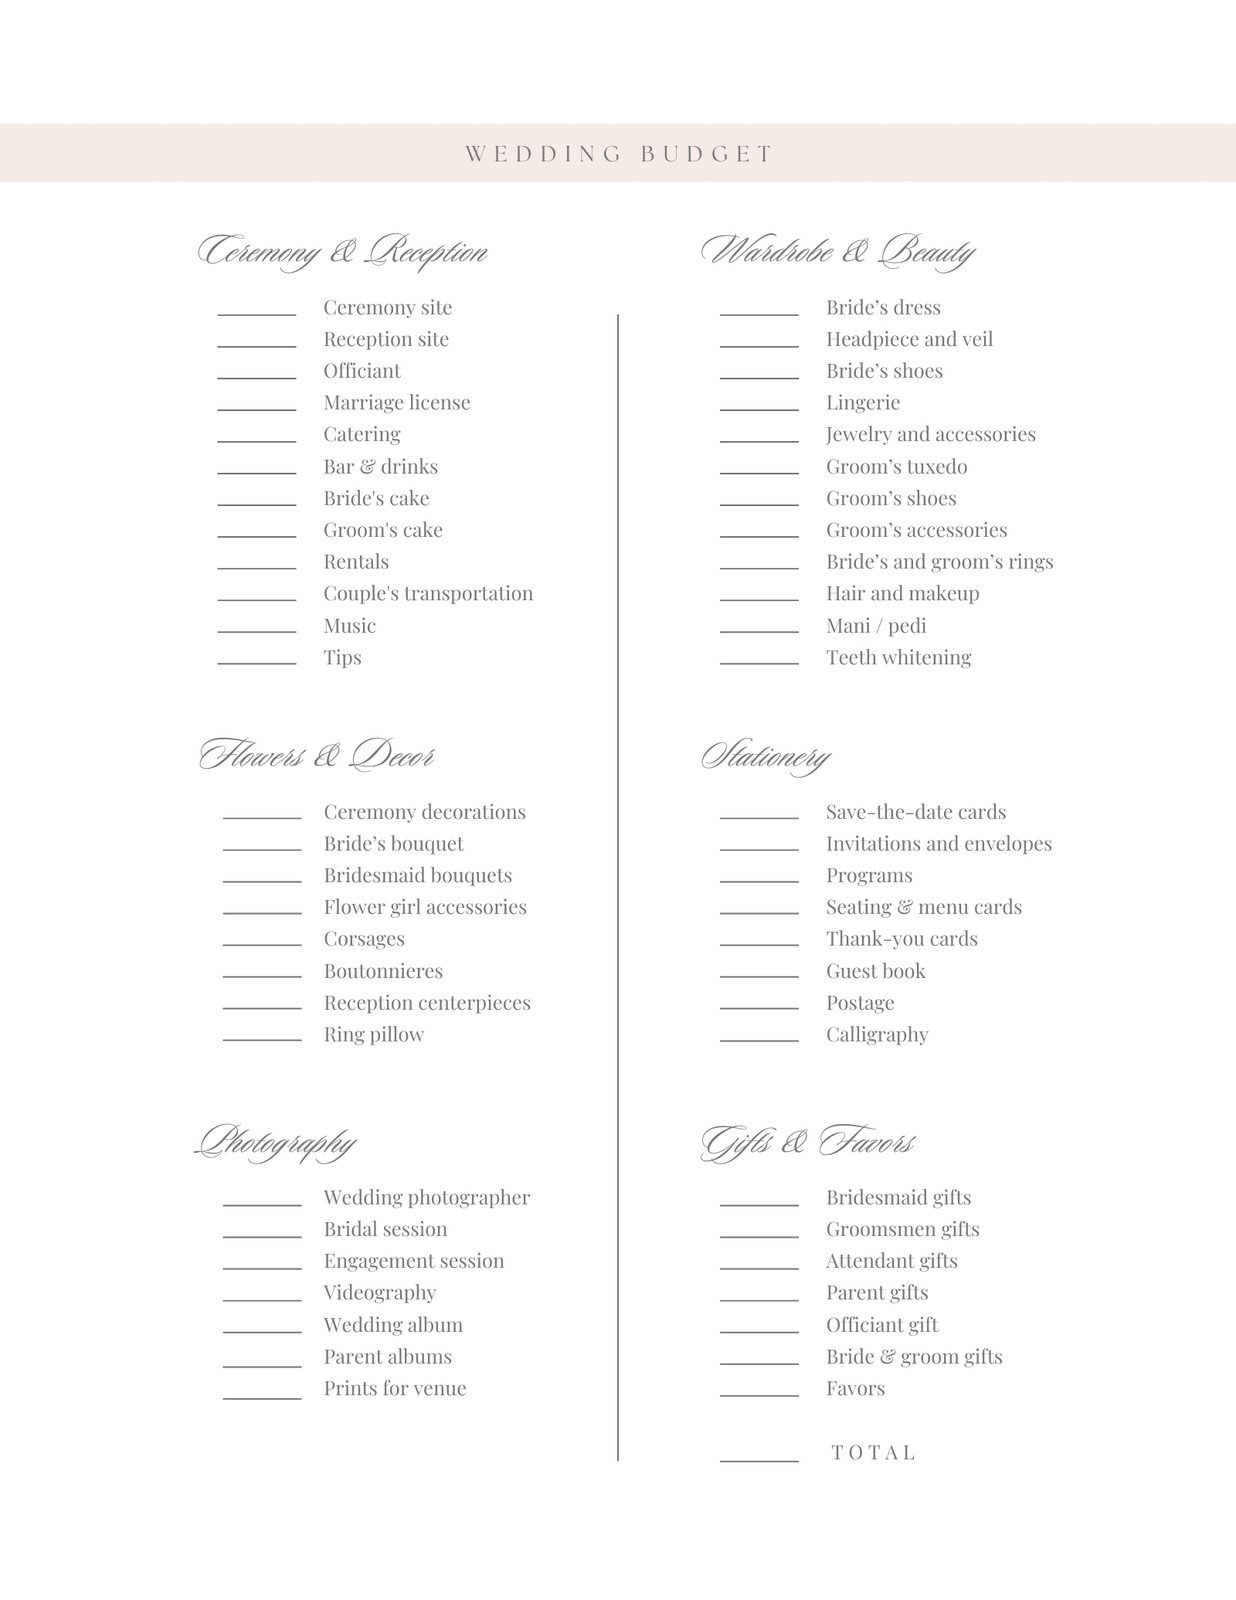 Bridal accessories checklist, Articles